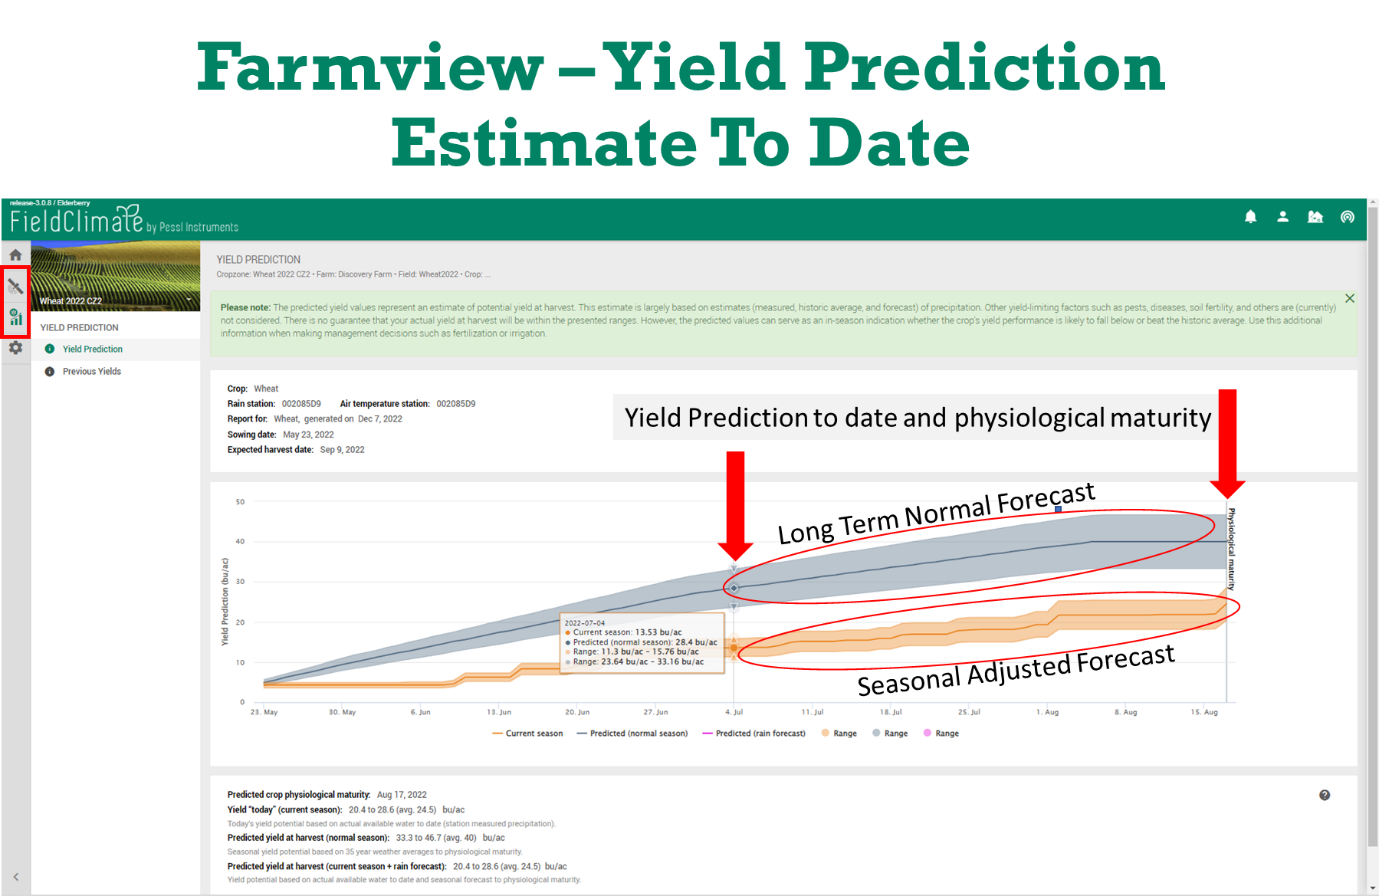 Yield Prediction Estimate to Date